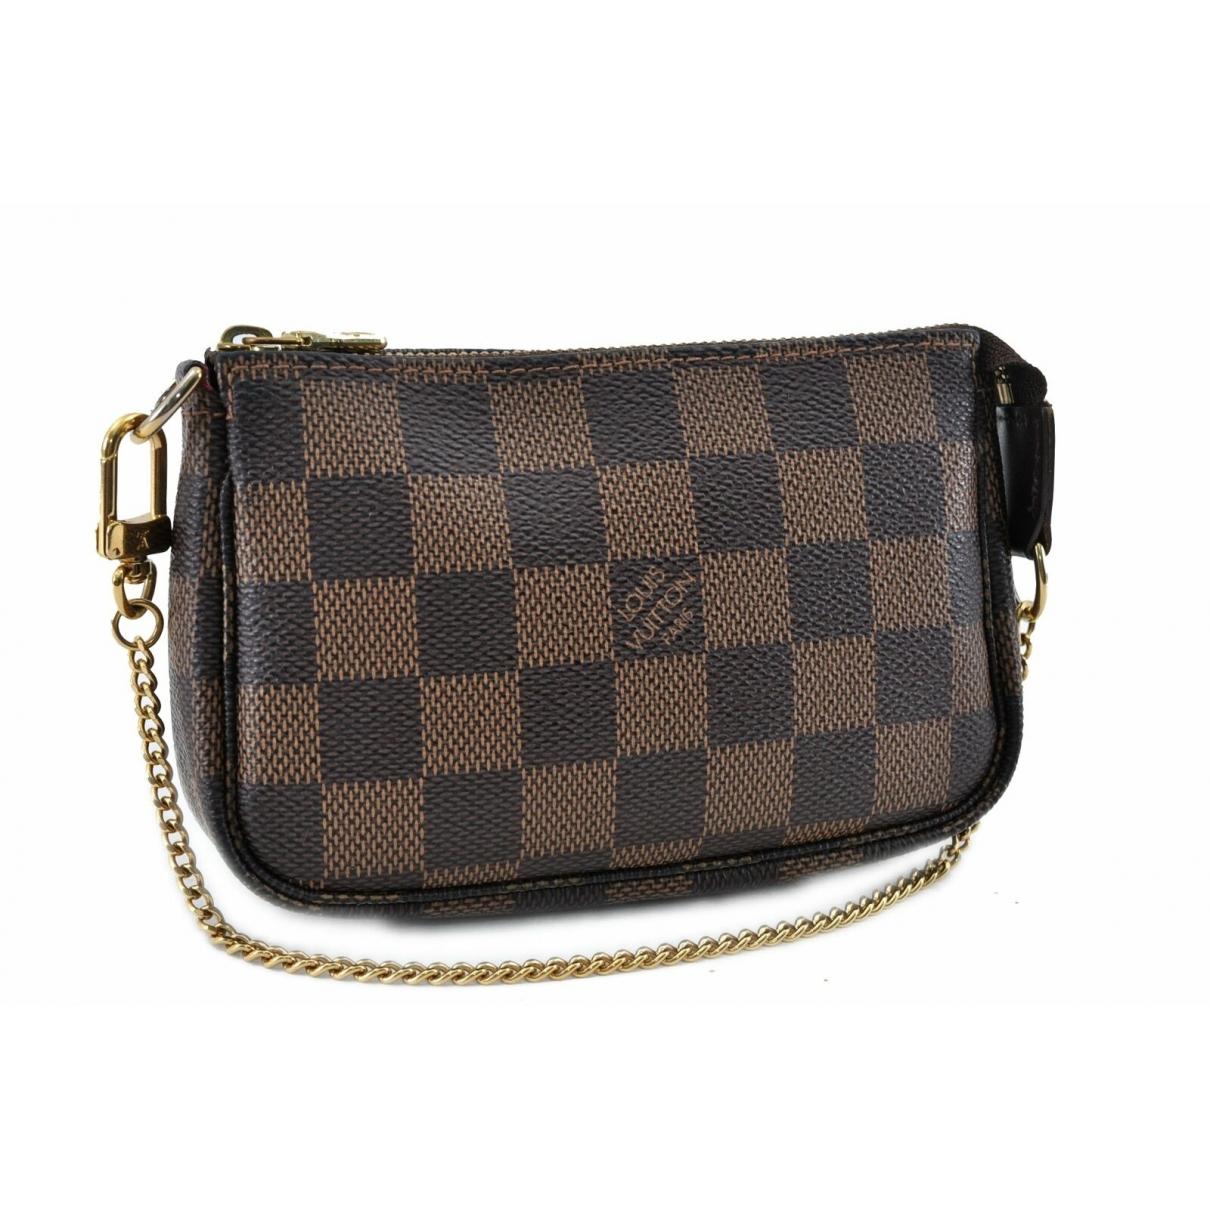 Lyst - Louis Vuitton Pochette Accessoire Brown Cloth Clutch Bag in Brown